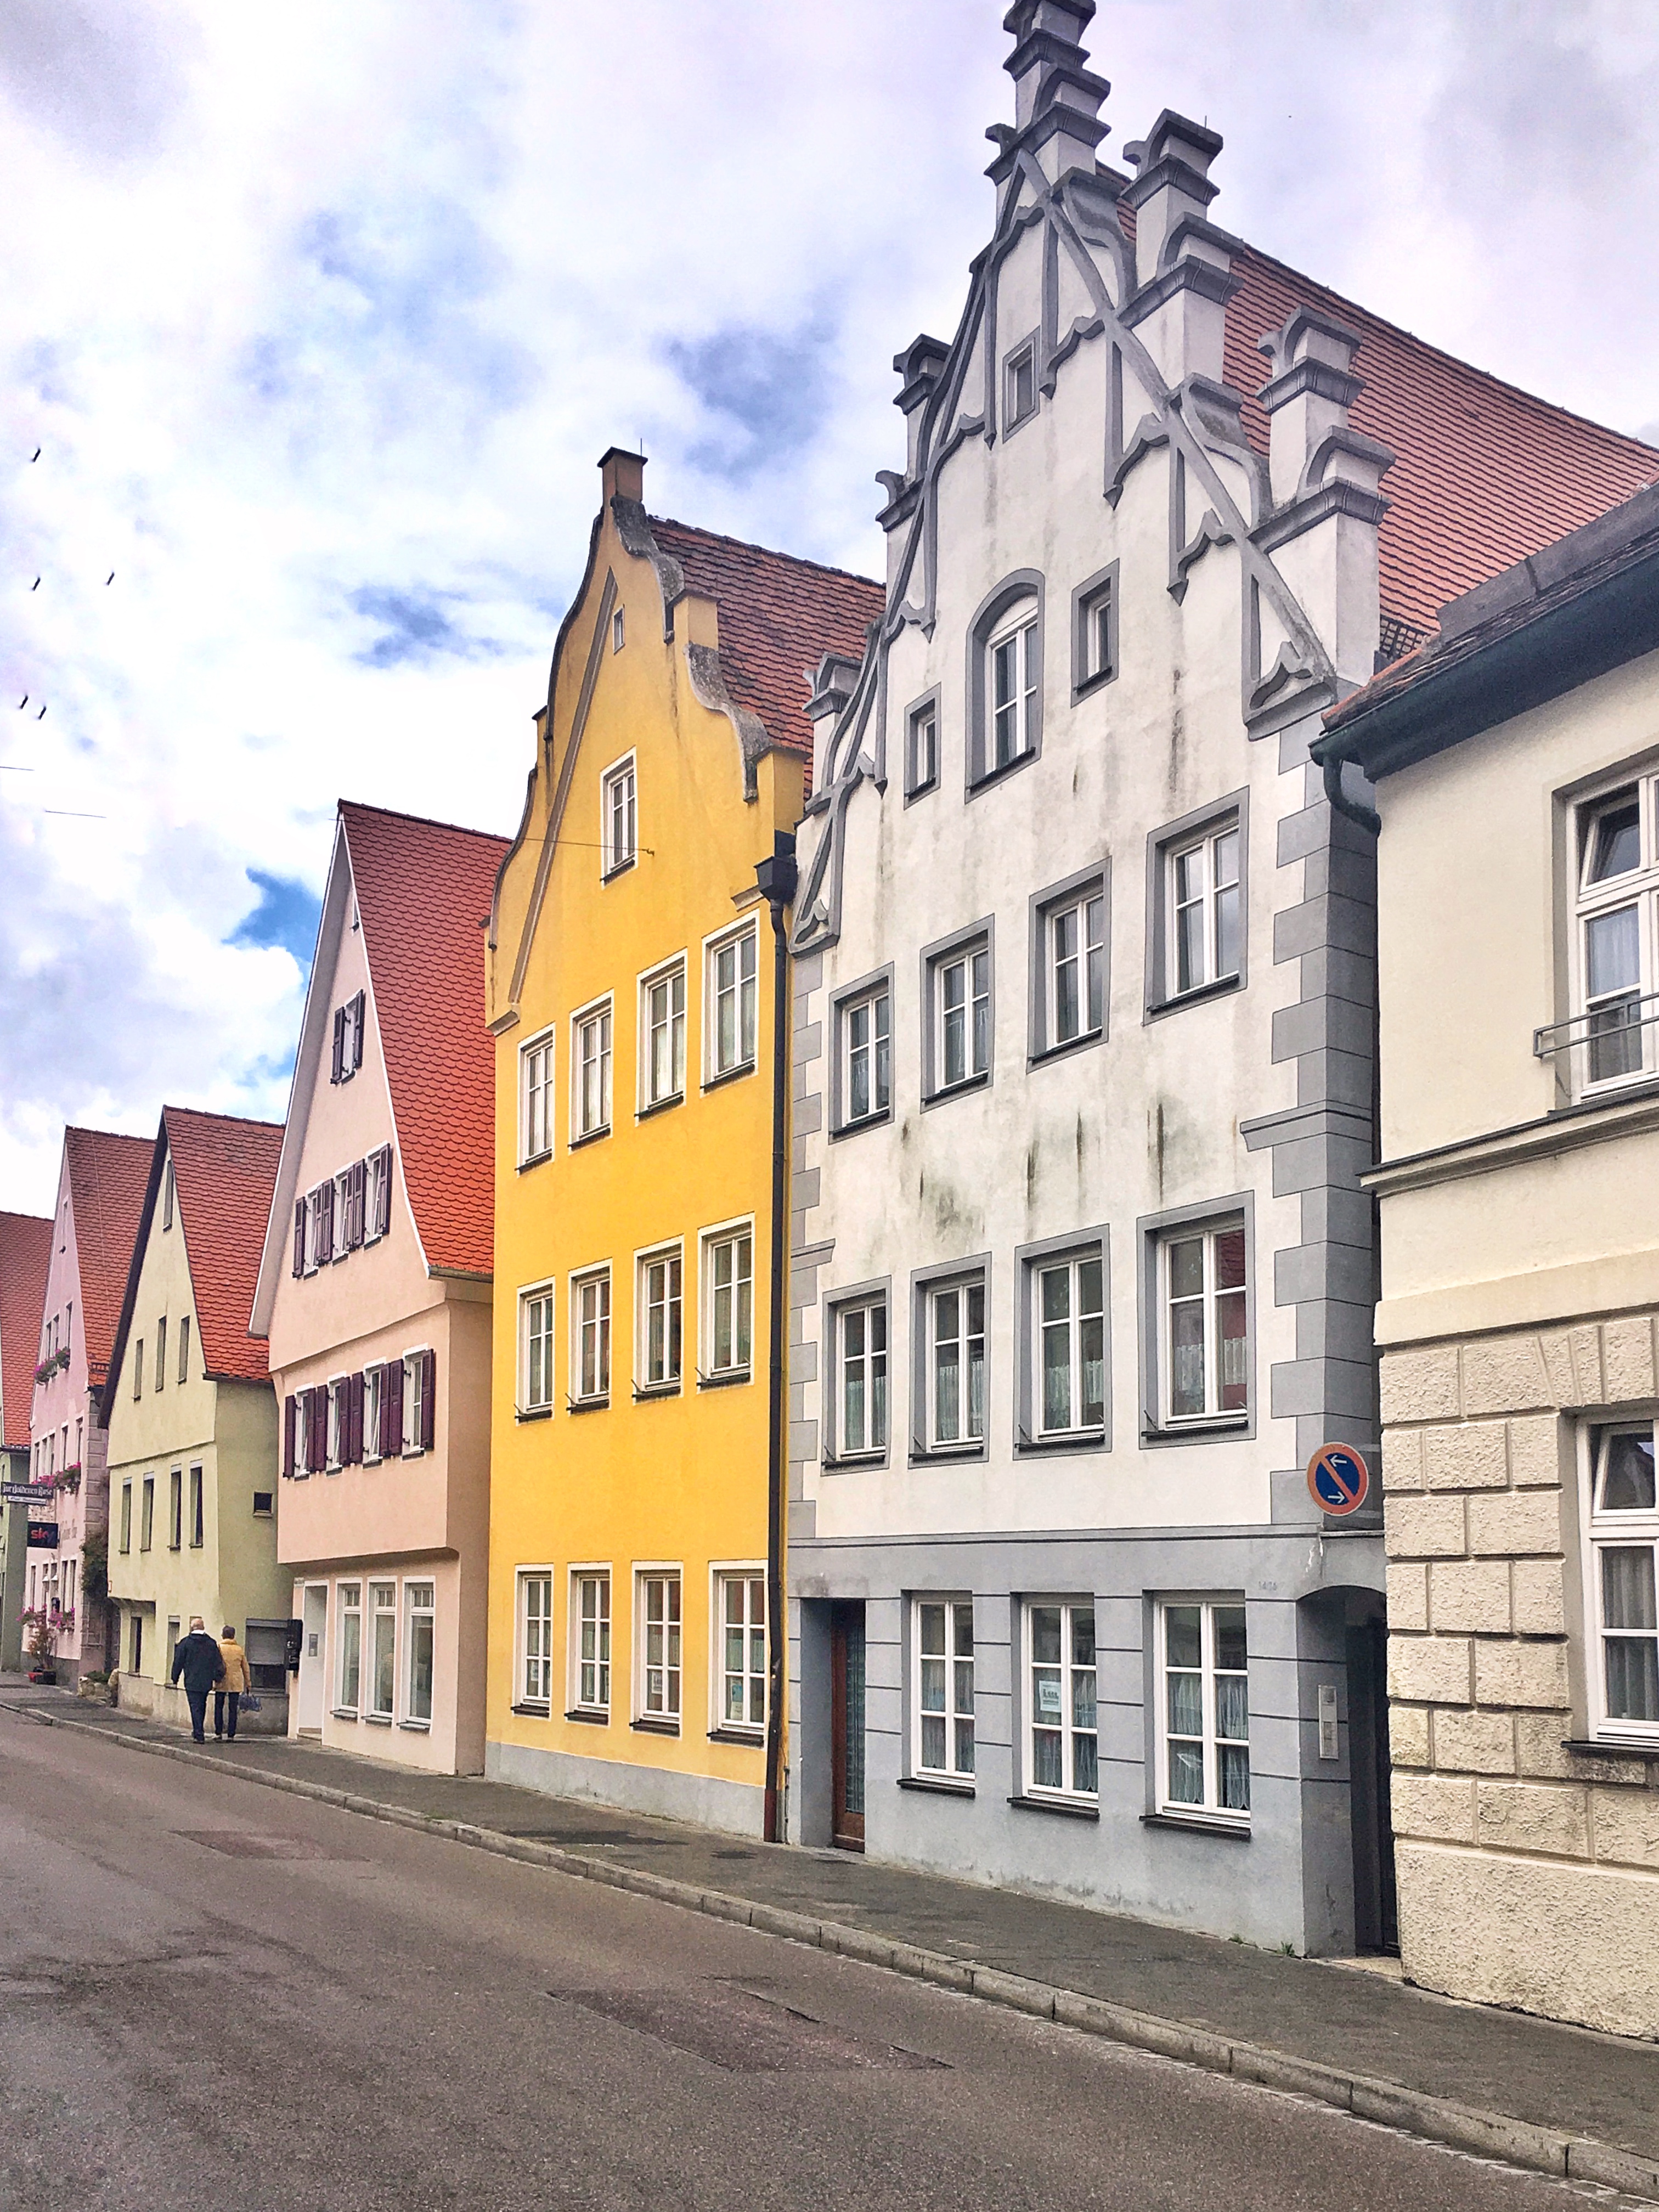 Colorful houses of Nordlingen Germany